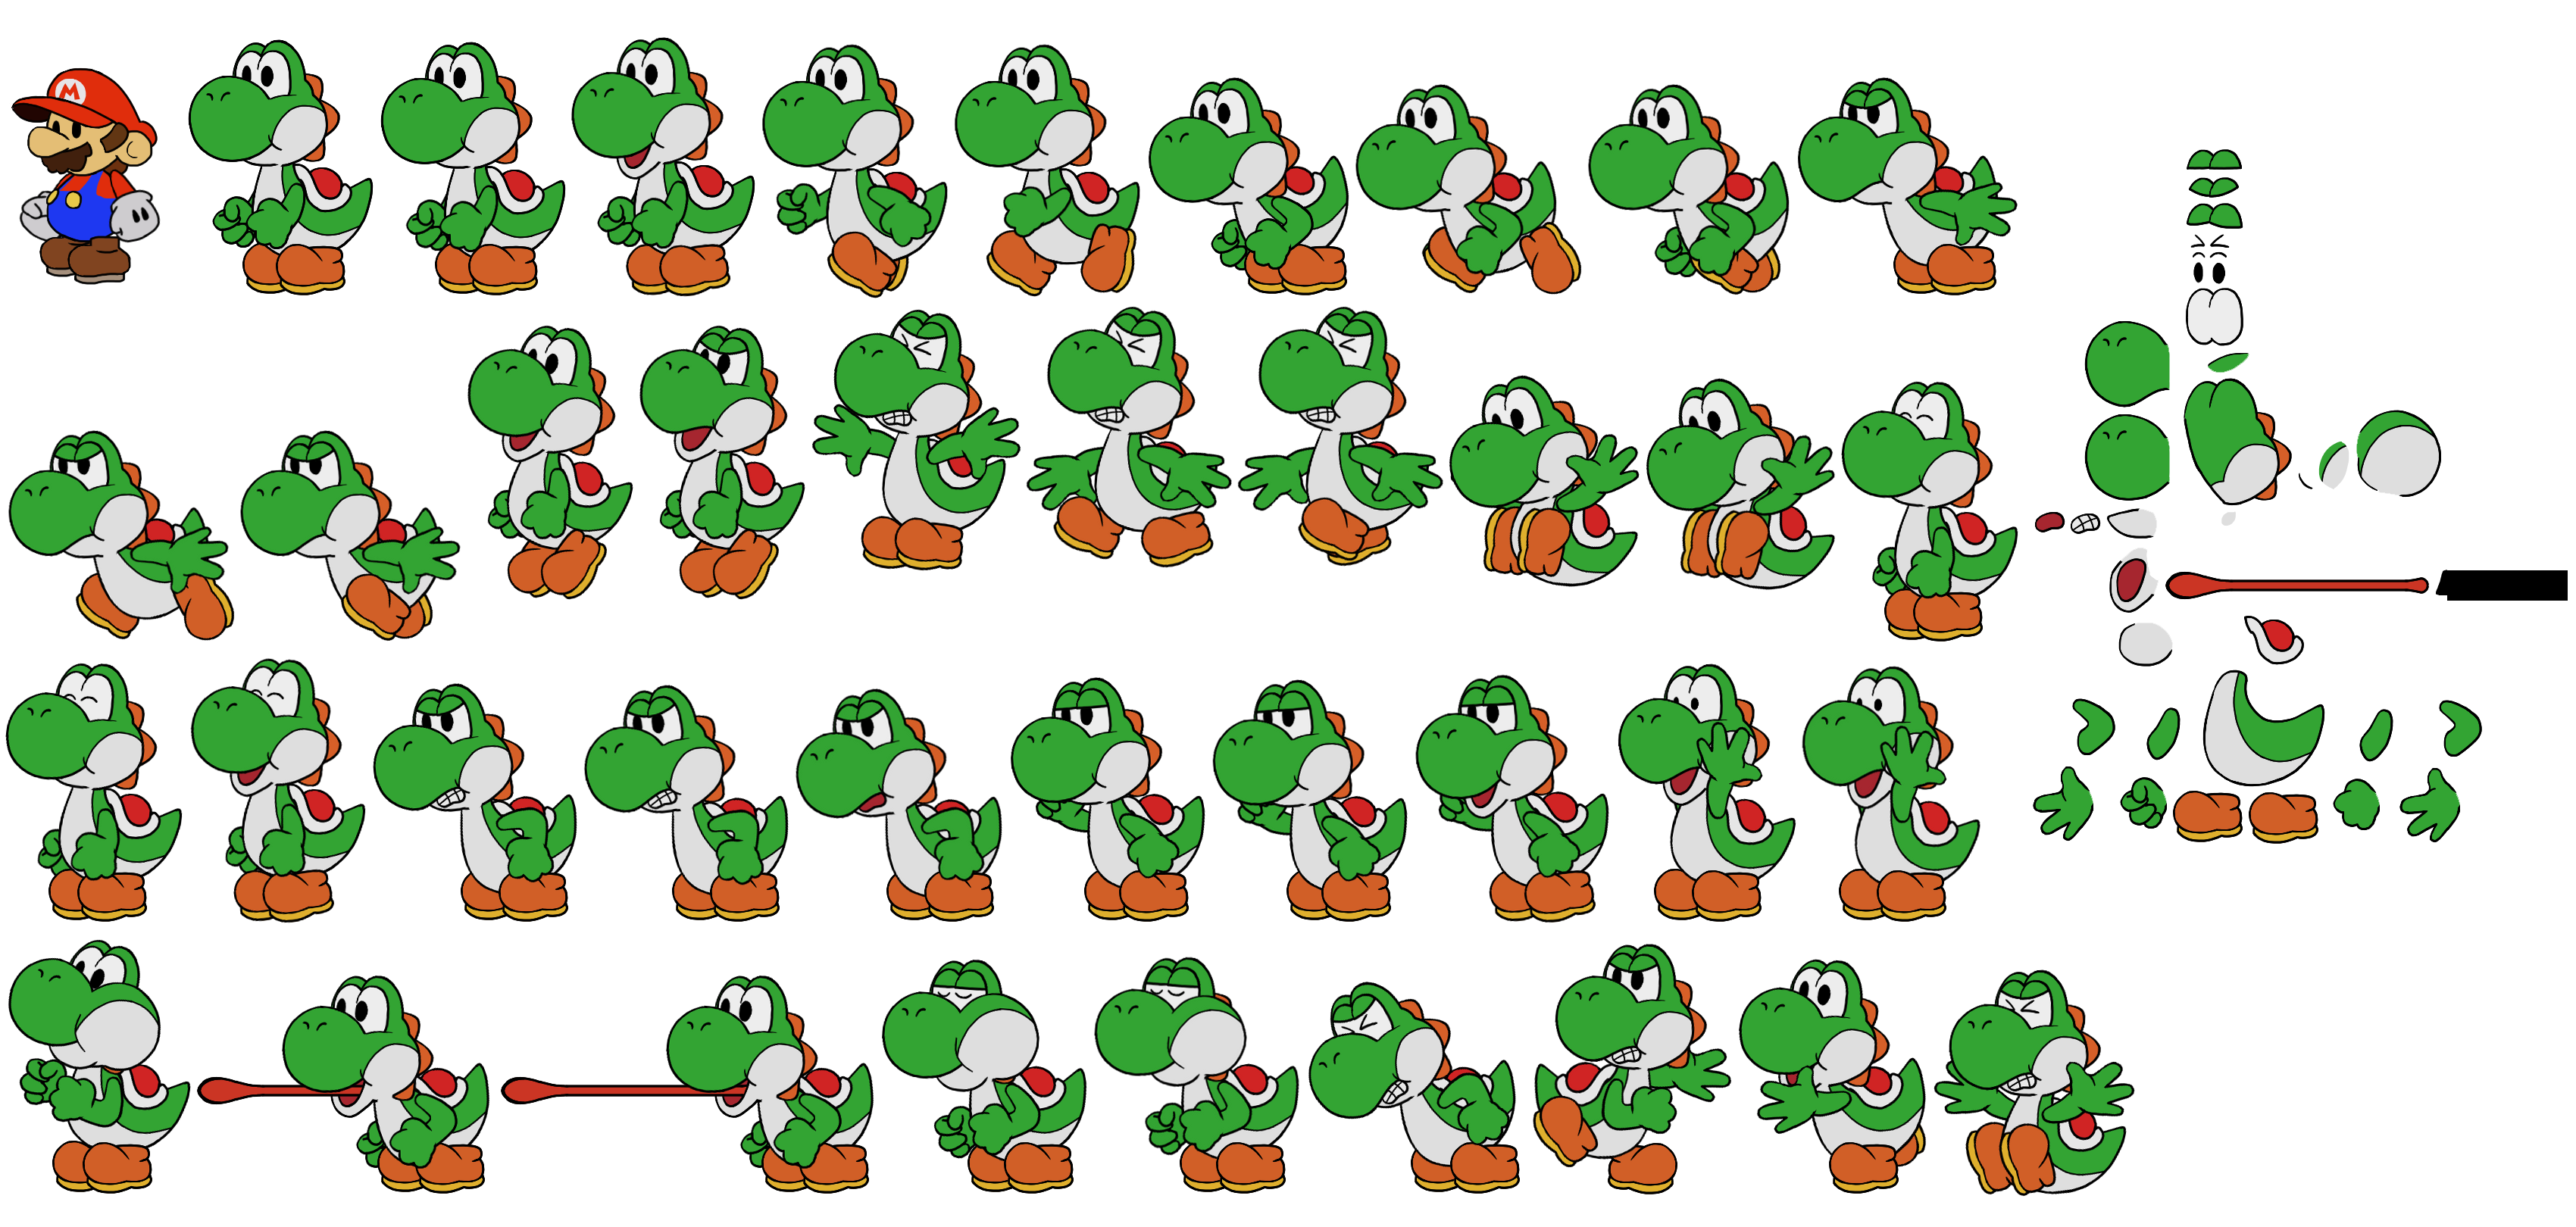 Yoshi Customs - Yoshi (Green) (Paper Mario-Style, Modern)